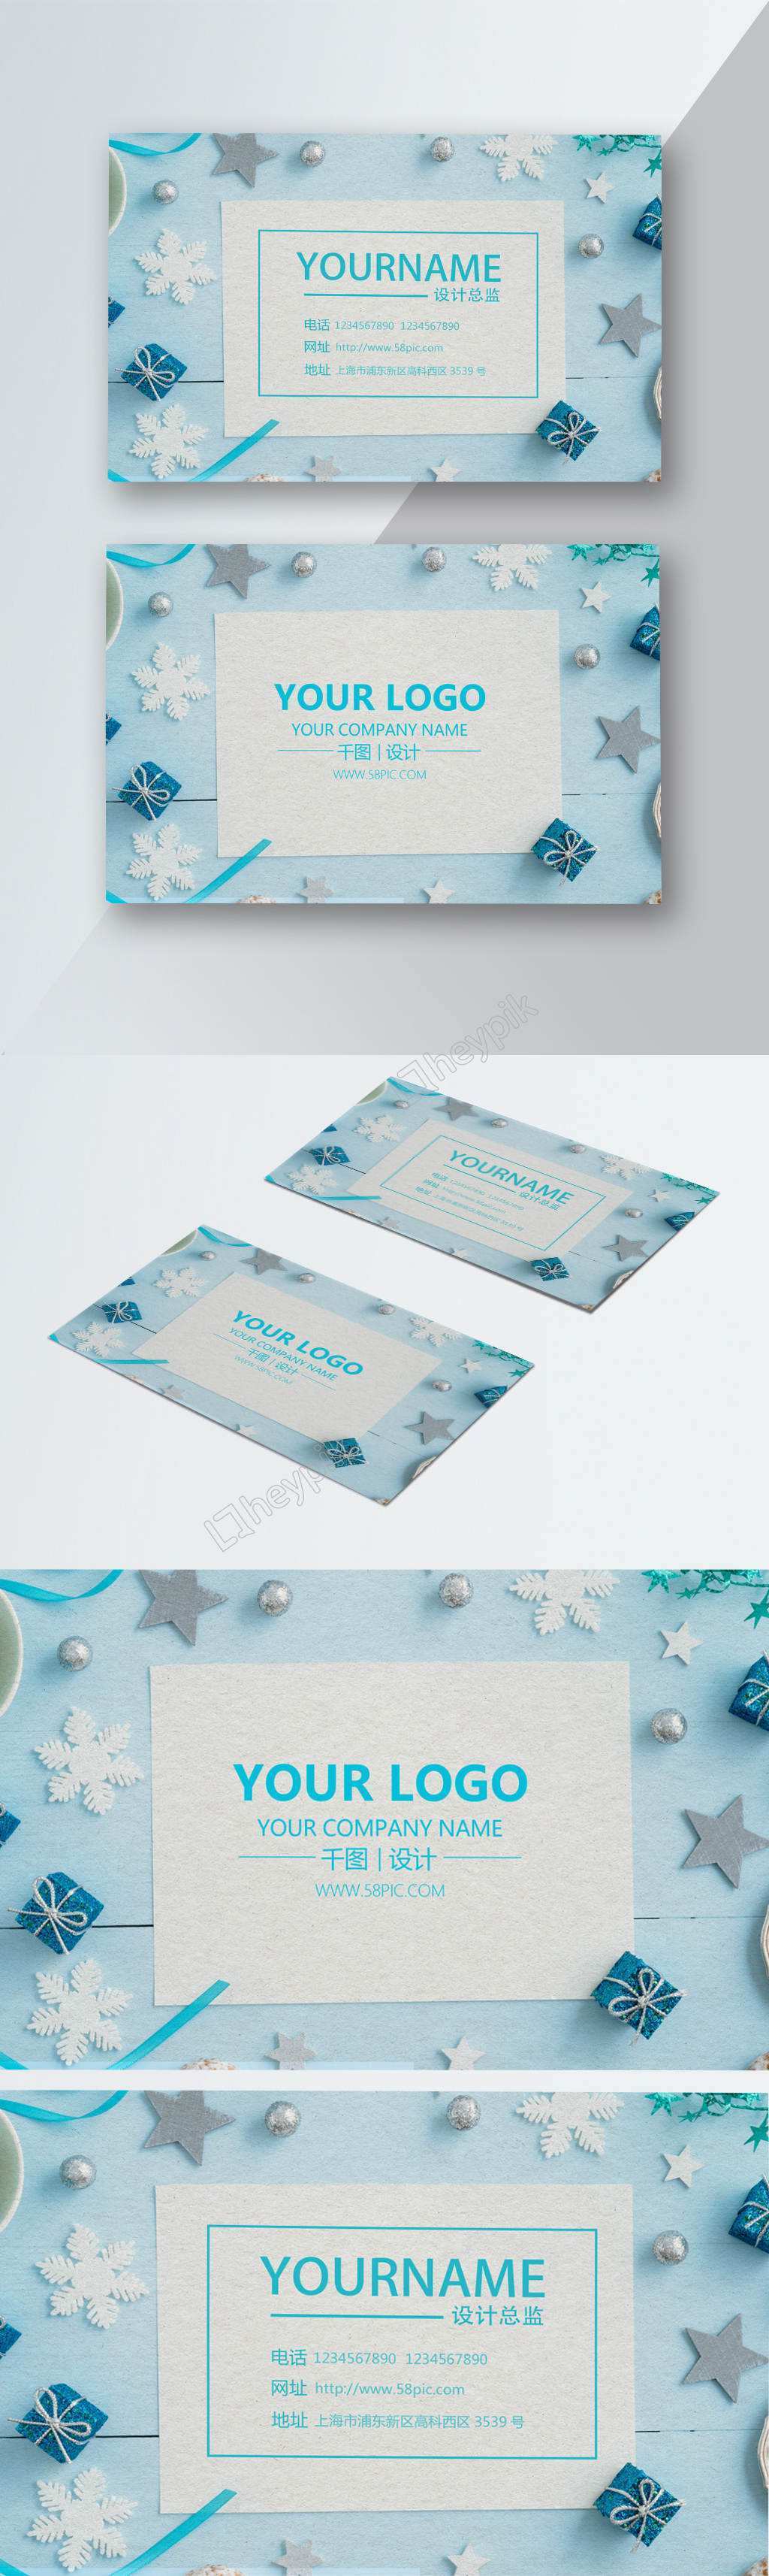 56 Visiting Christmas Design Business Card Psd Template For Free with Christmas Design Business Card Psd Template